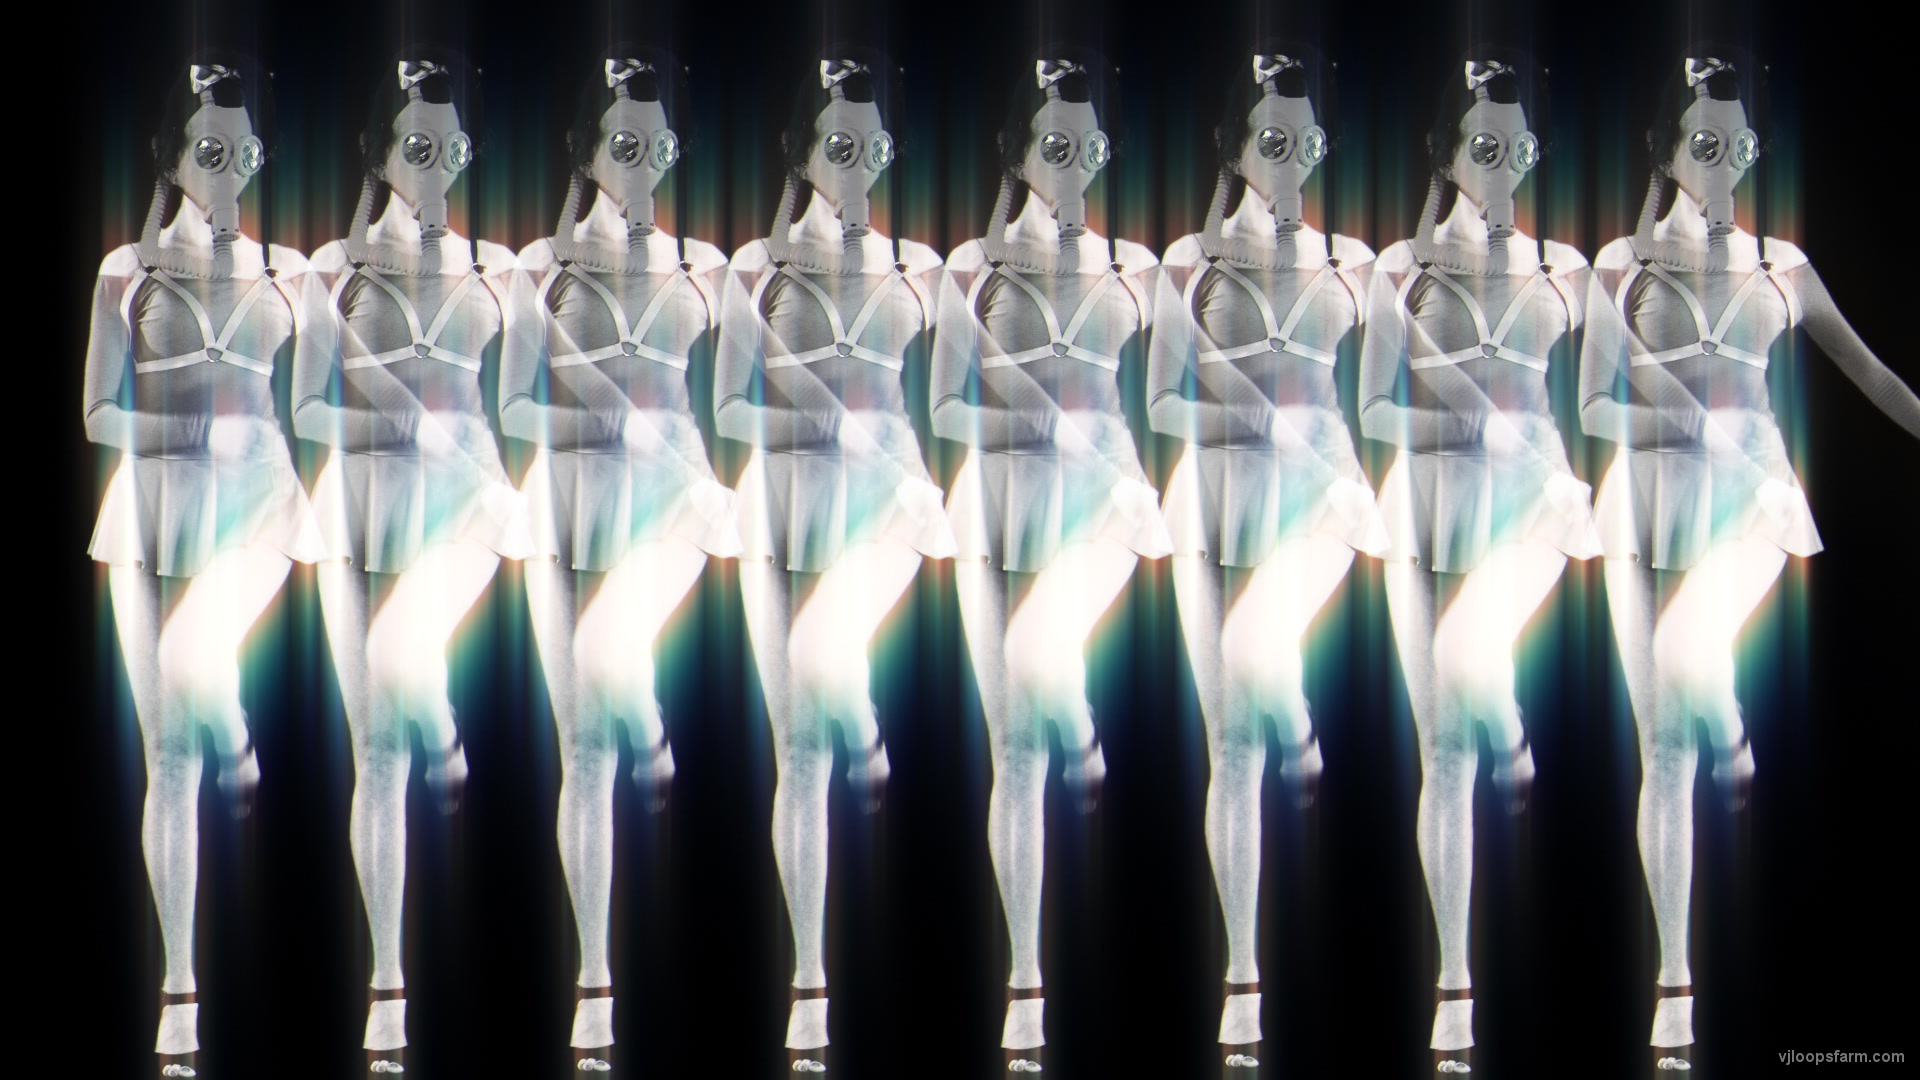 Black White Girls Video Texture Pattern in Gas Mask marshing with glowing effect stock footage video art vj loop